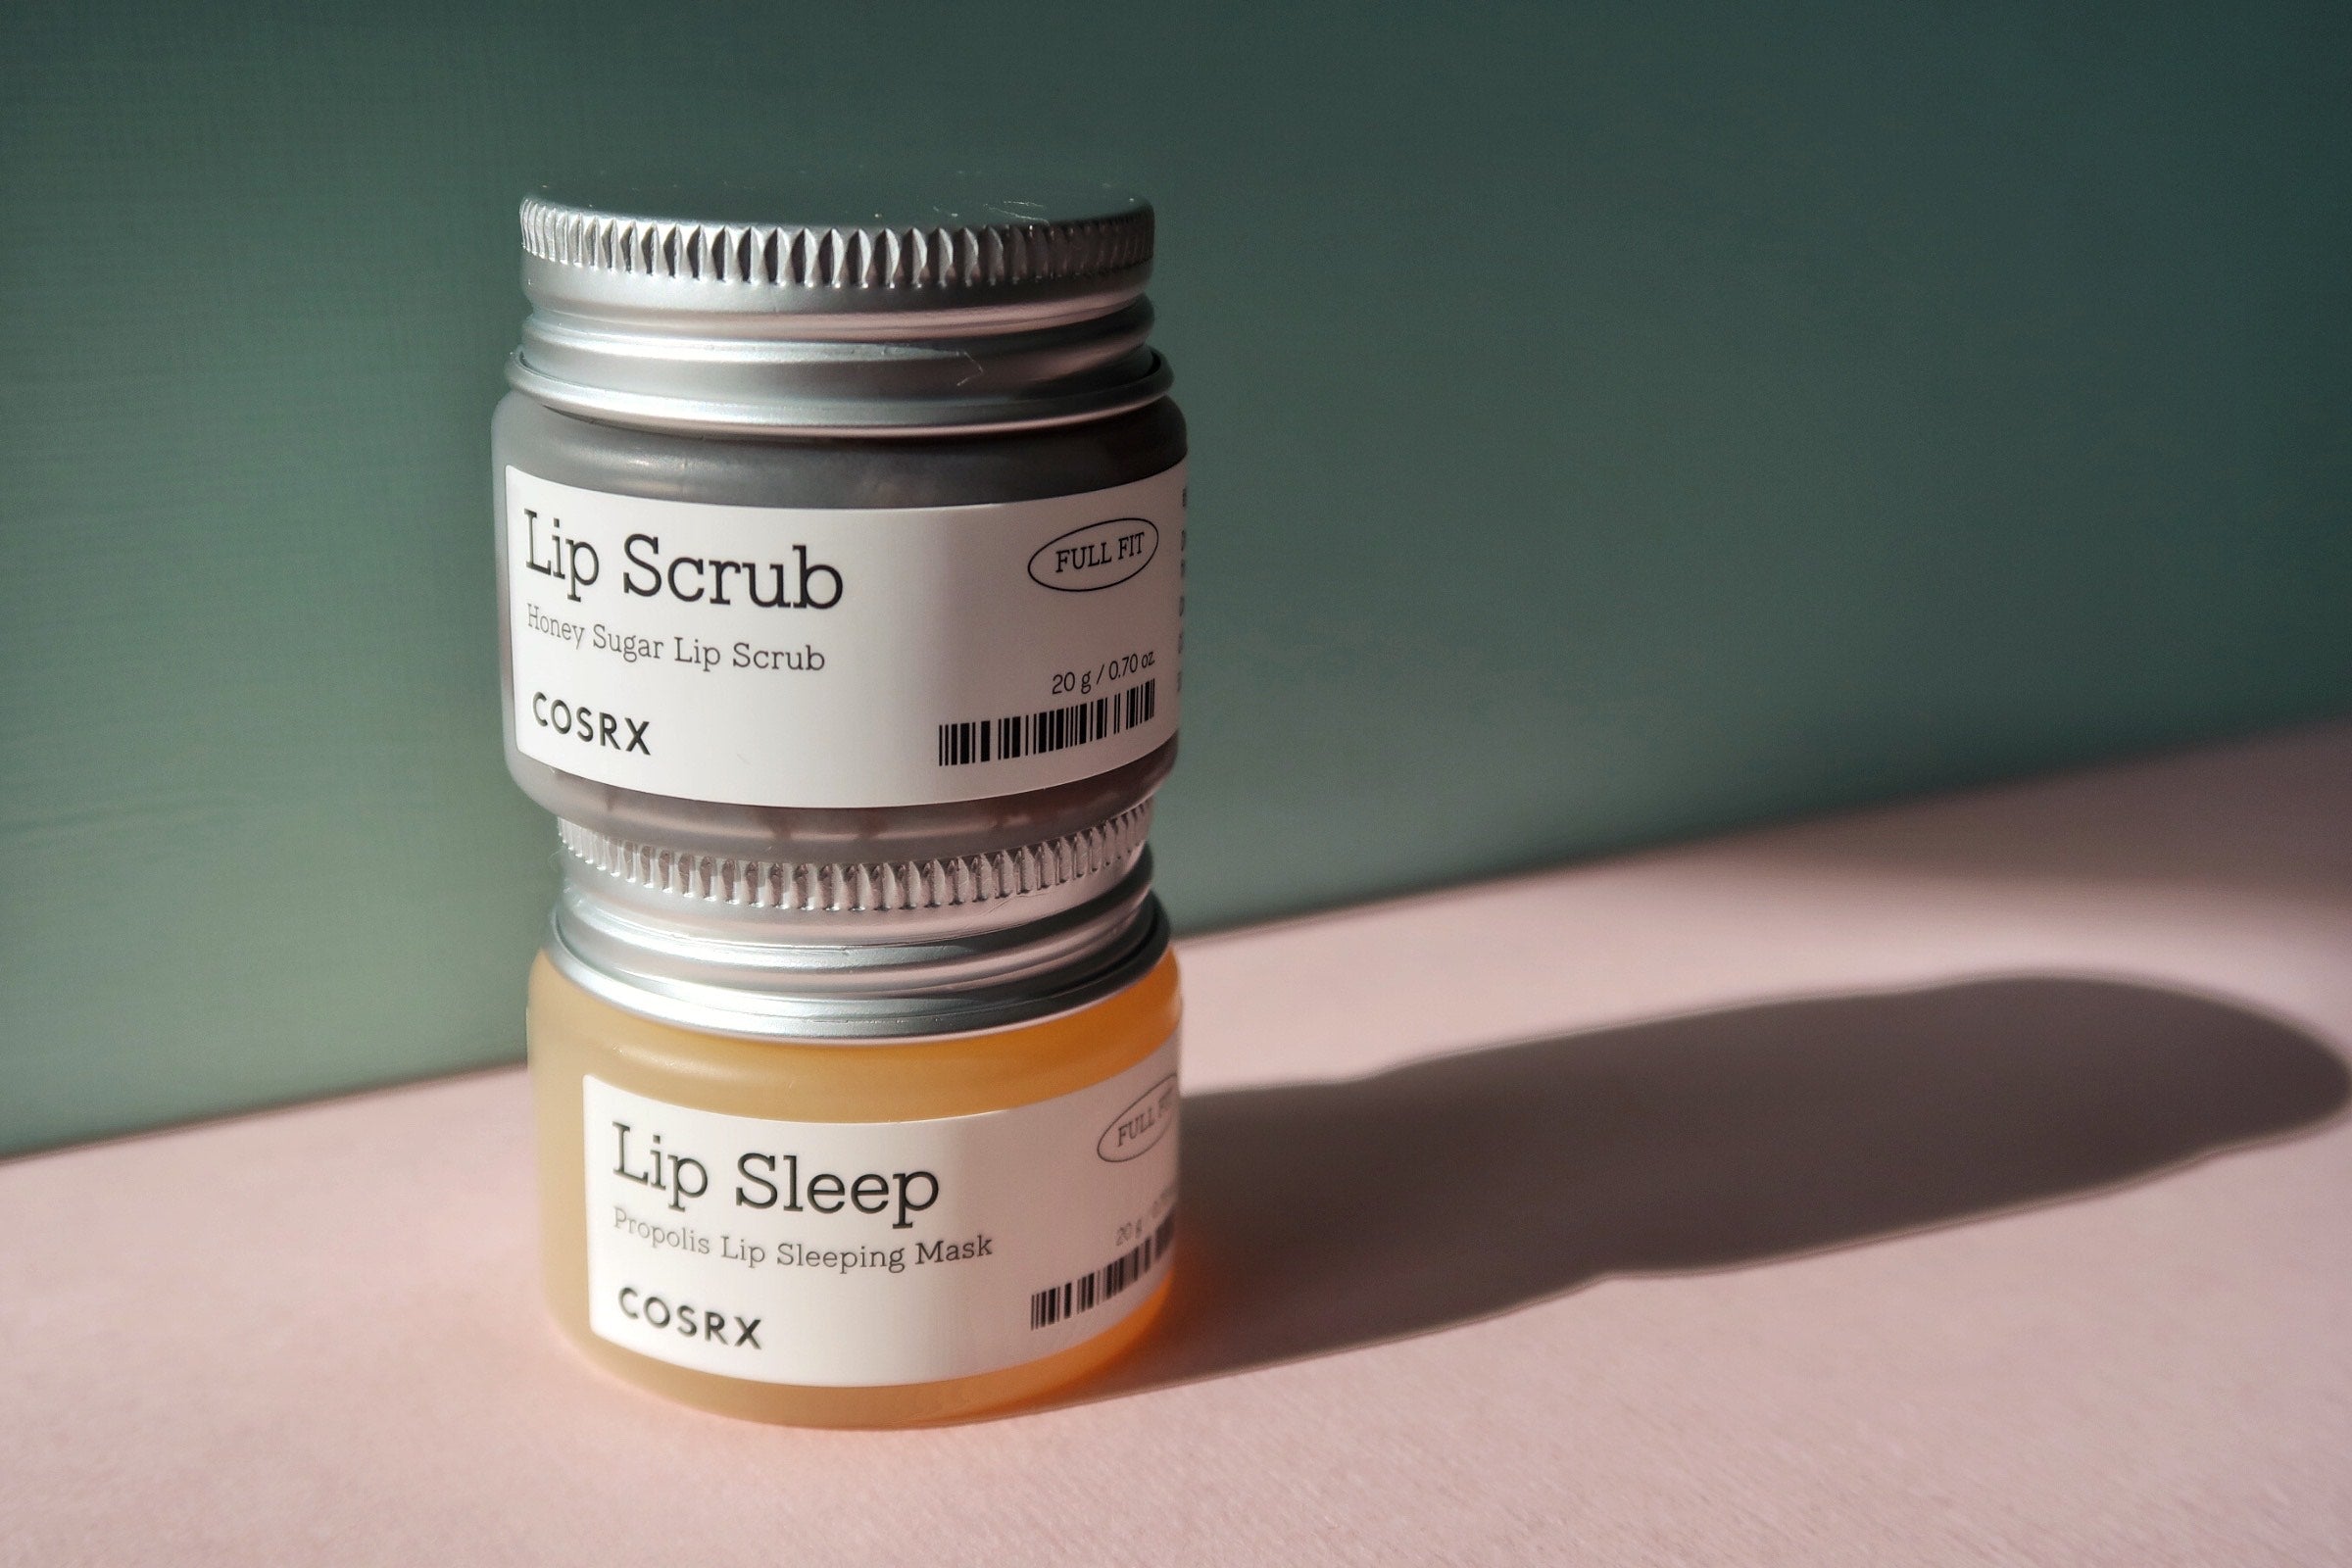 HI-REVIEW: COSRX Full Fit Honey Sugar Lip Scrub & Lip Sleeping Mask